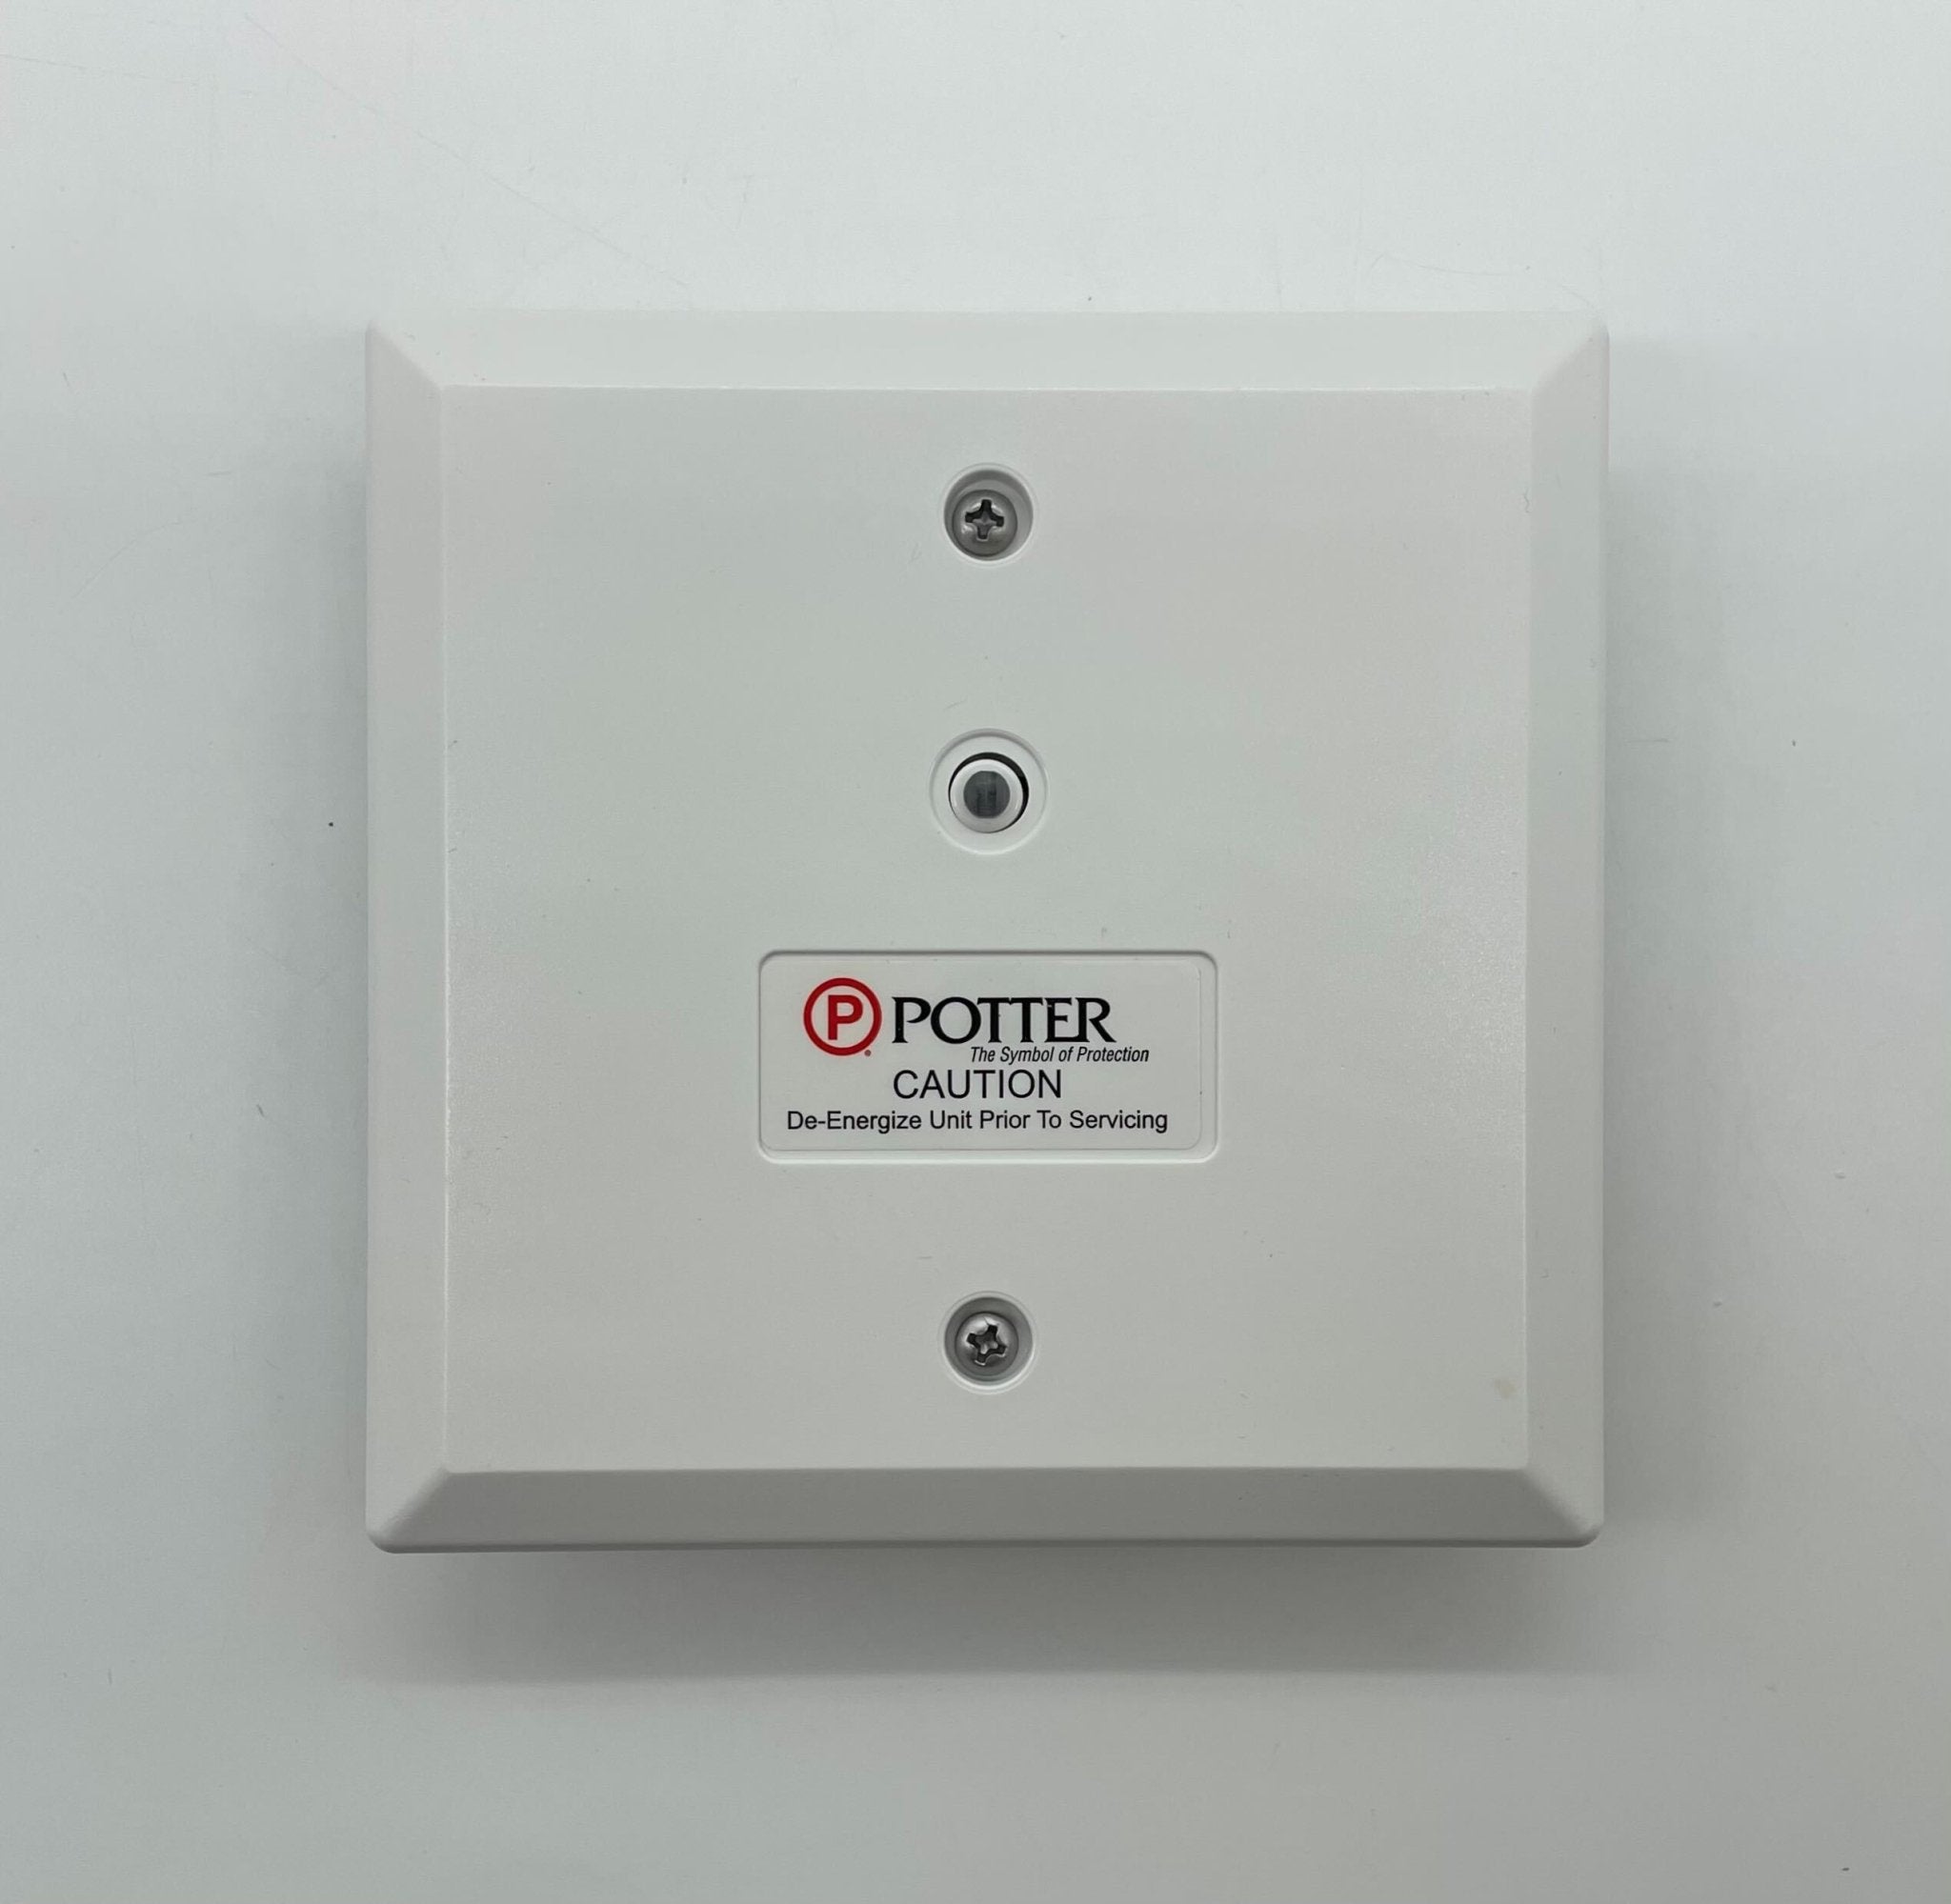 Potter PAD100-SIM - The Fire Alarm Supplier